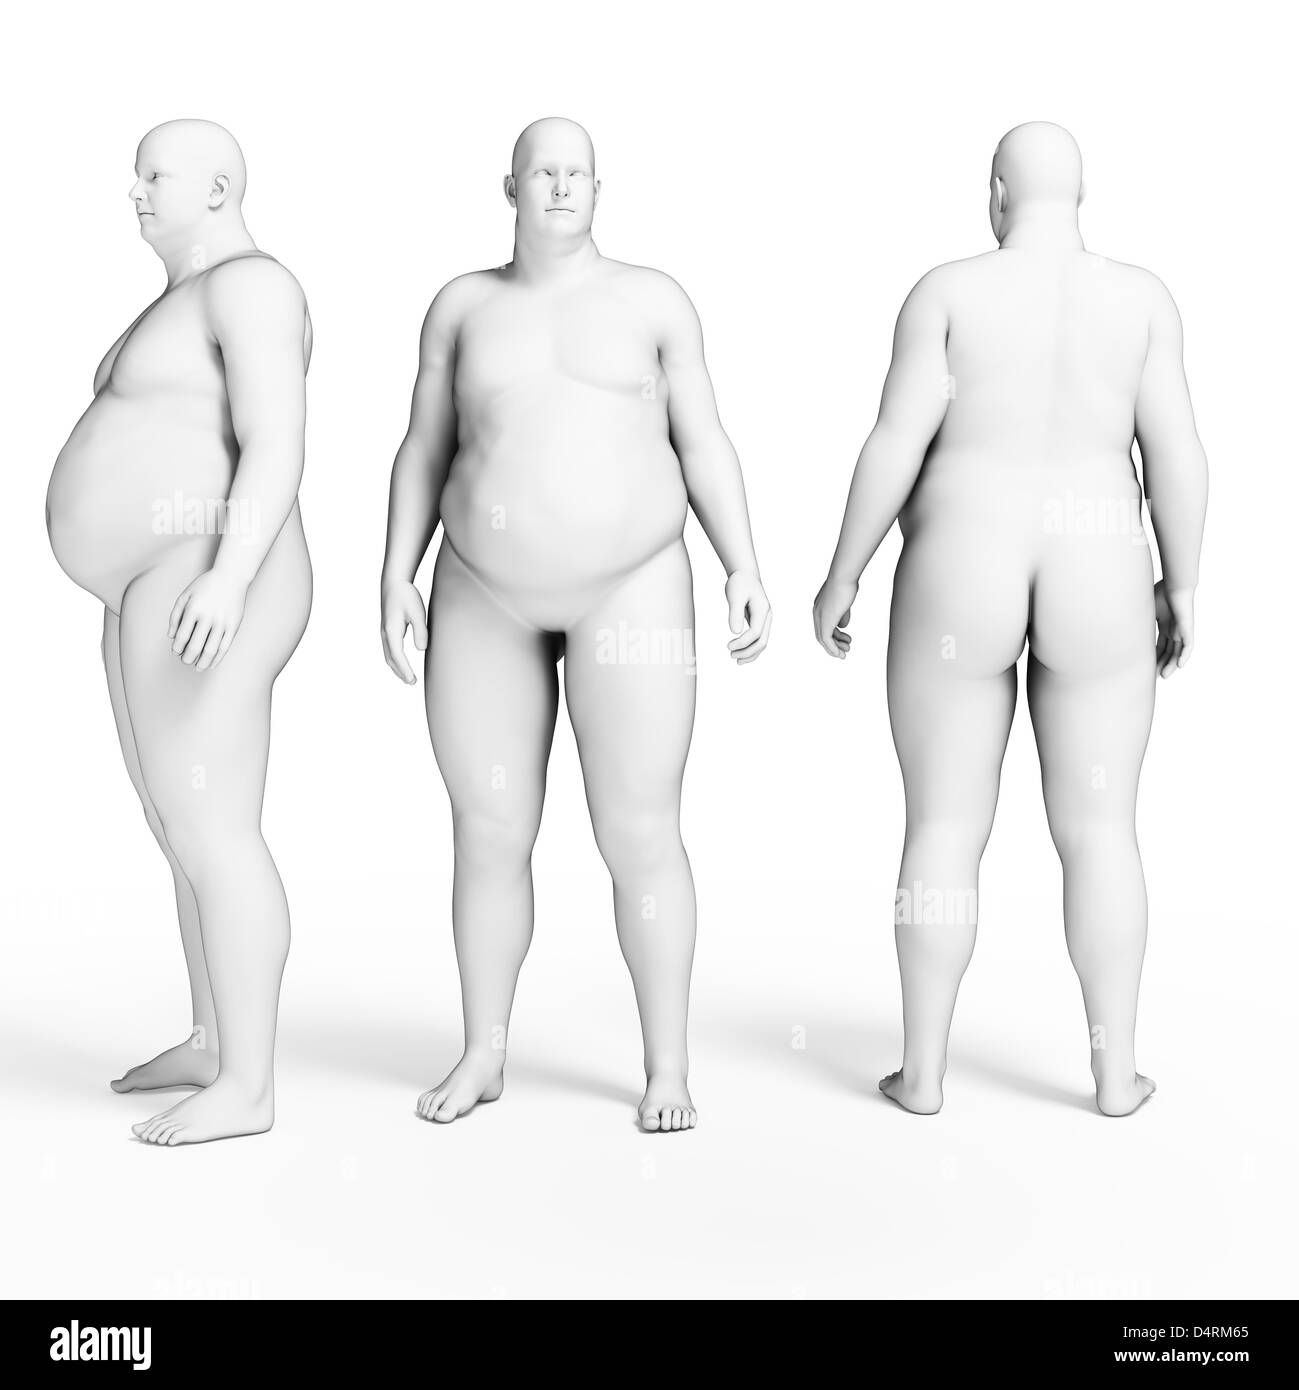 Overweight men Stock Photo